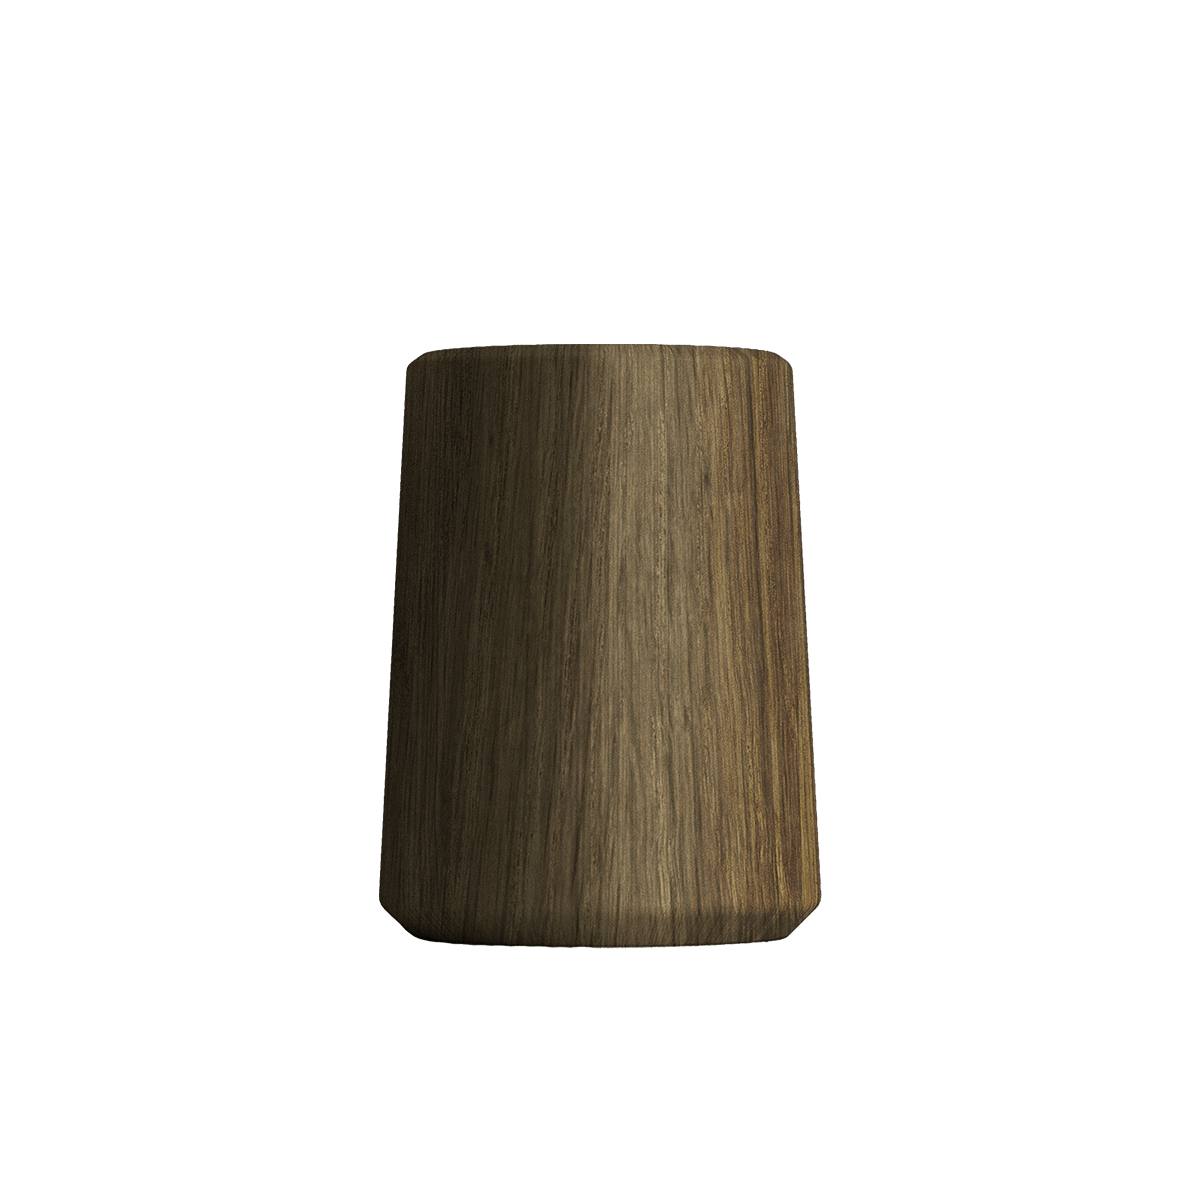 variant_600212% | Ambience - Oslo base - Smoked Oak 10 | SACKit